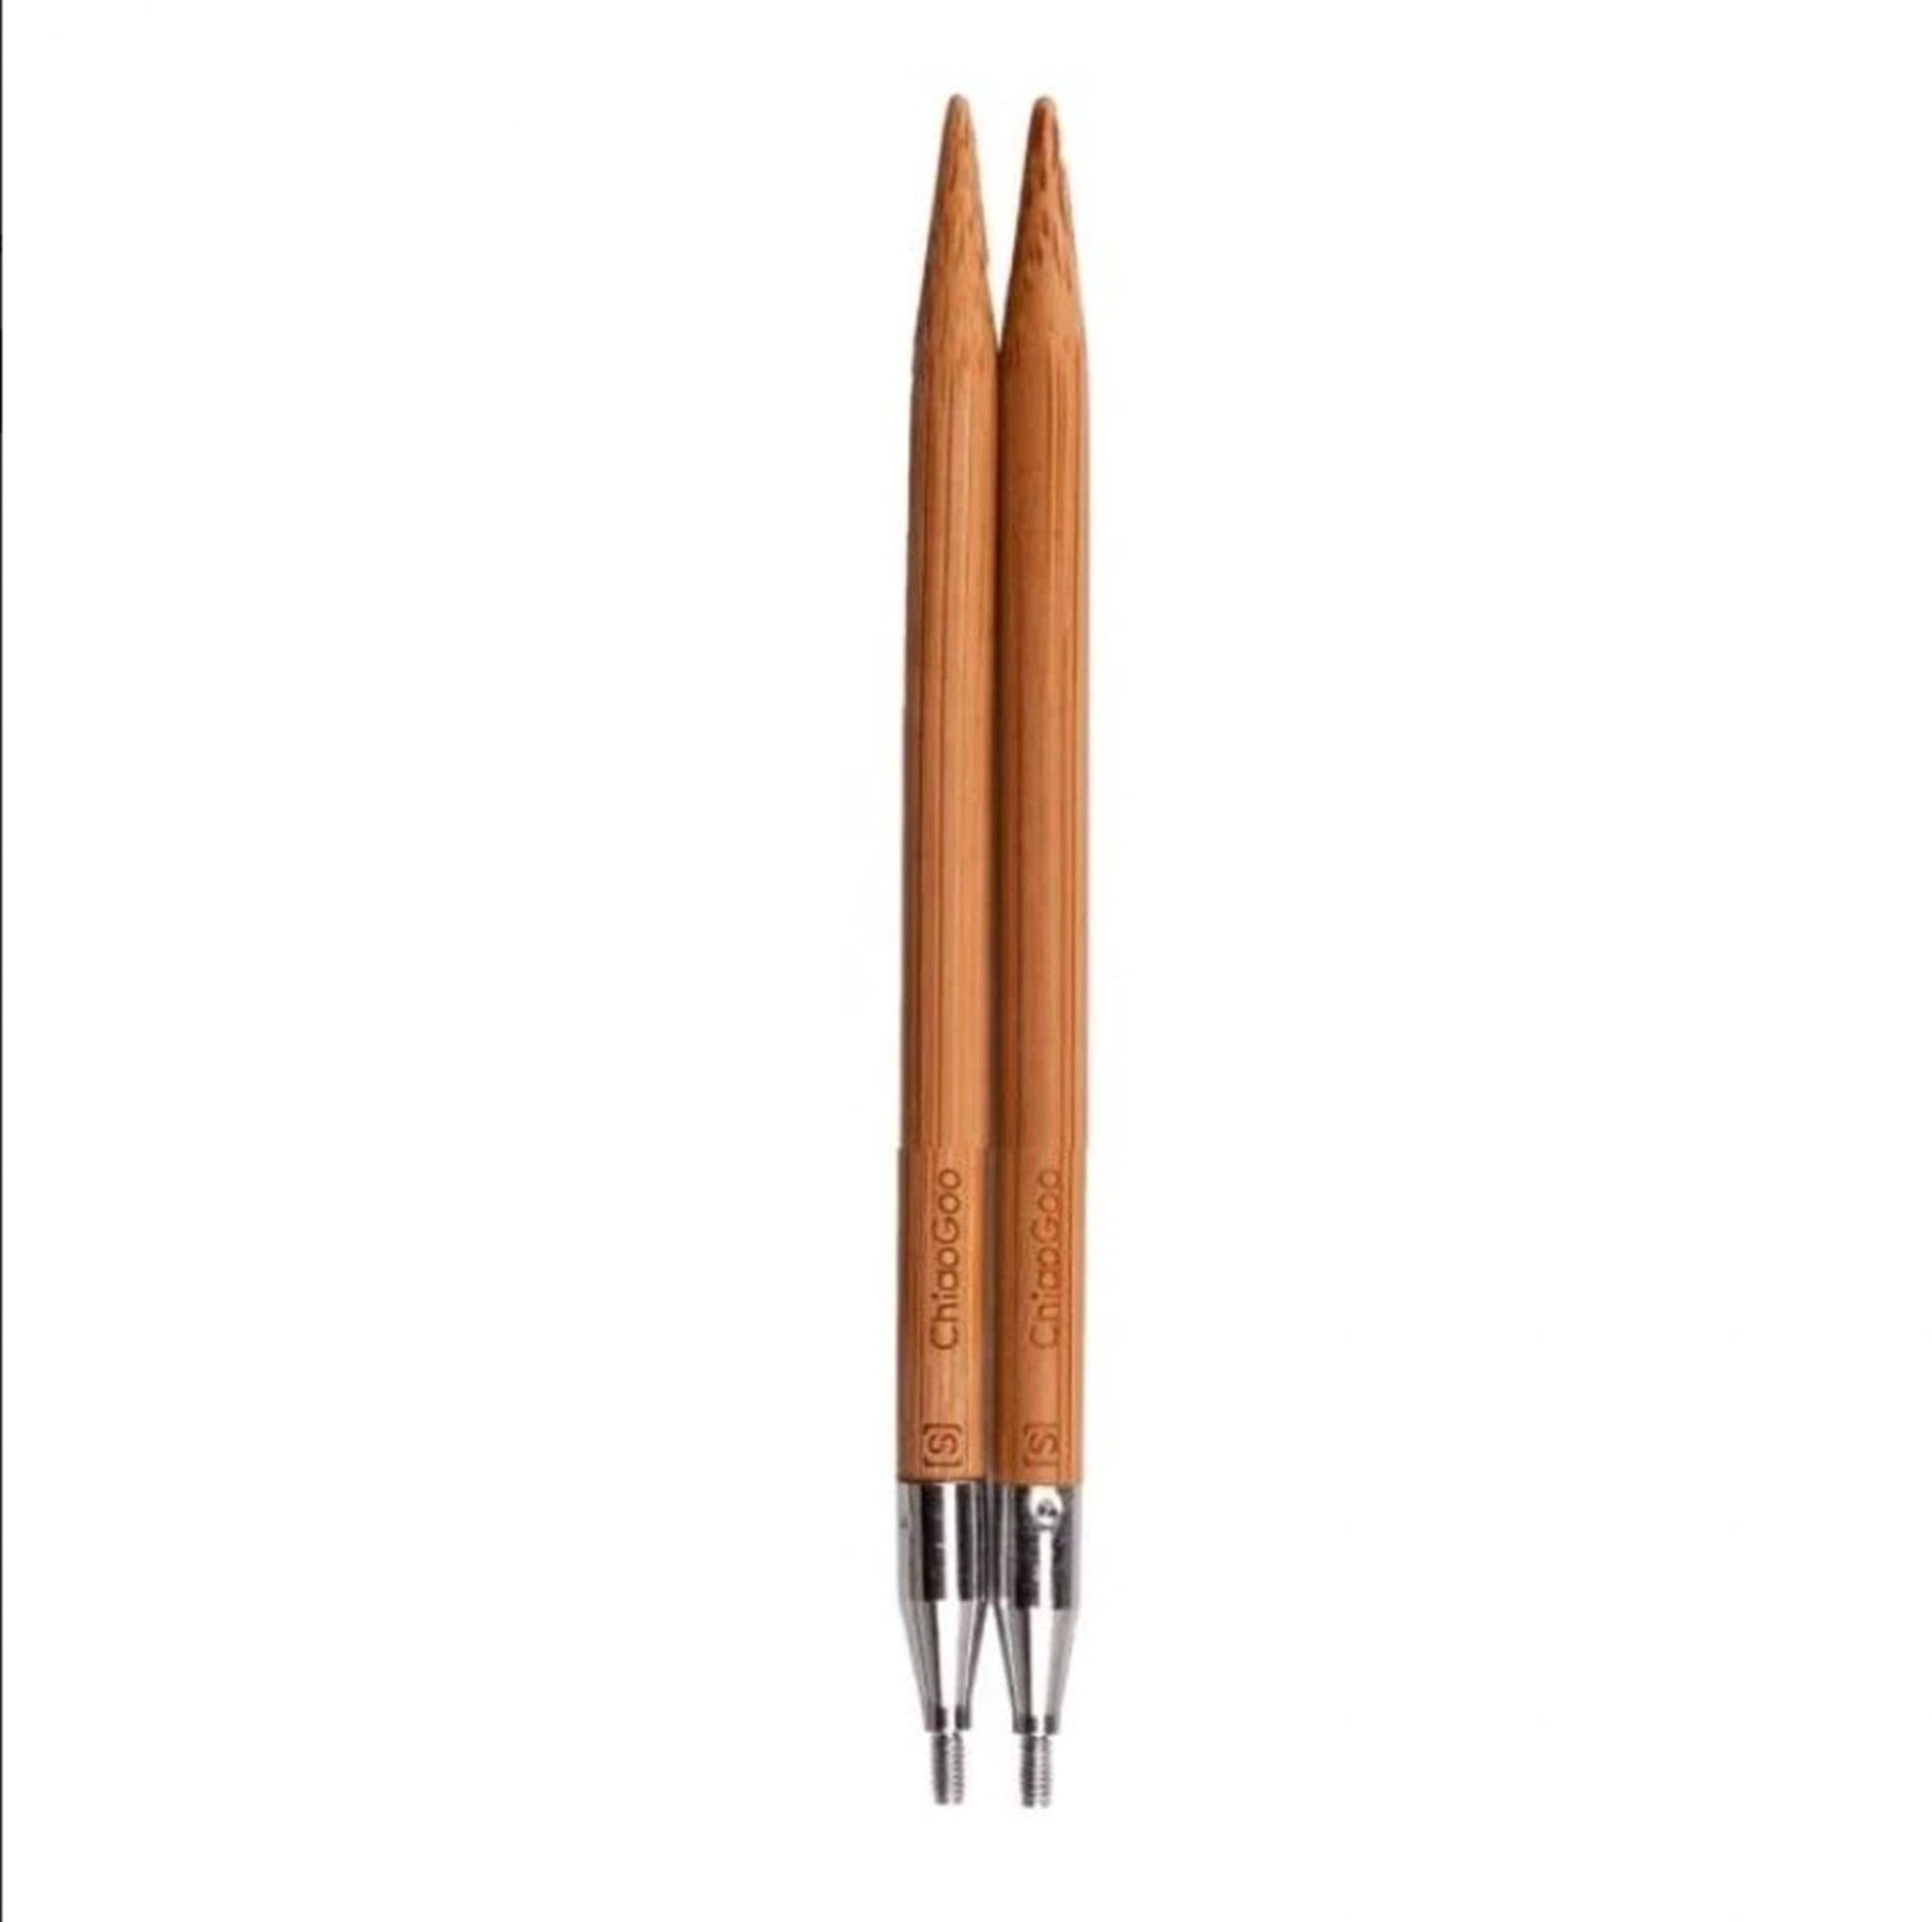 ChiaoGoo Bamboo Circular 12 Knitting Needles: Size 7